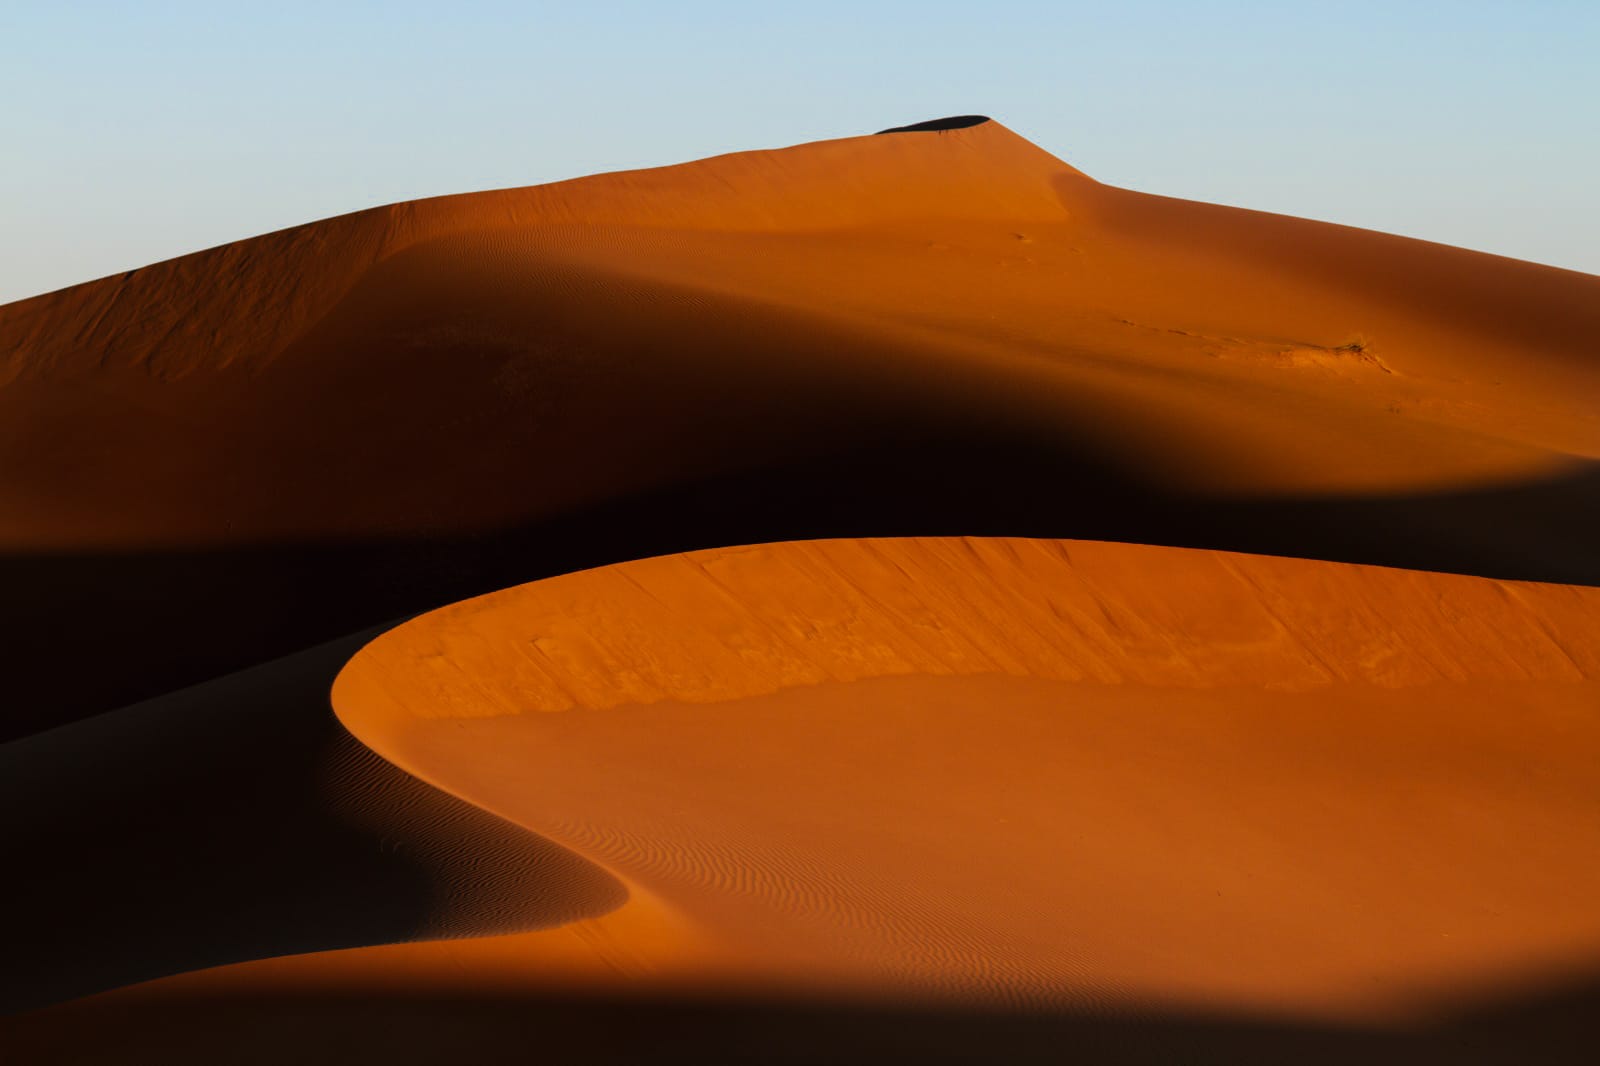 Desierto del Sahara Marruecos